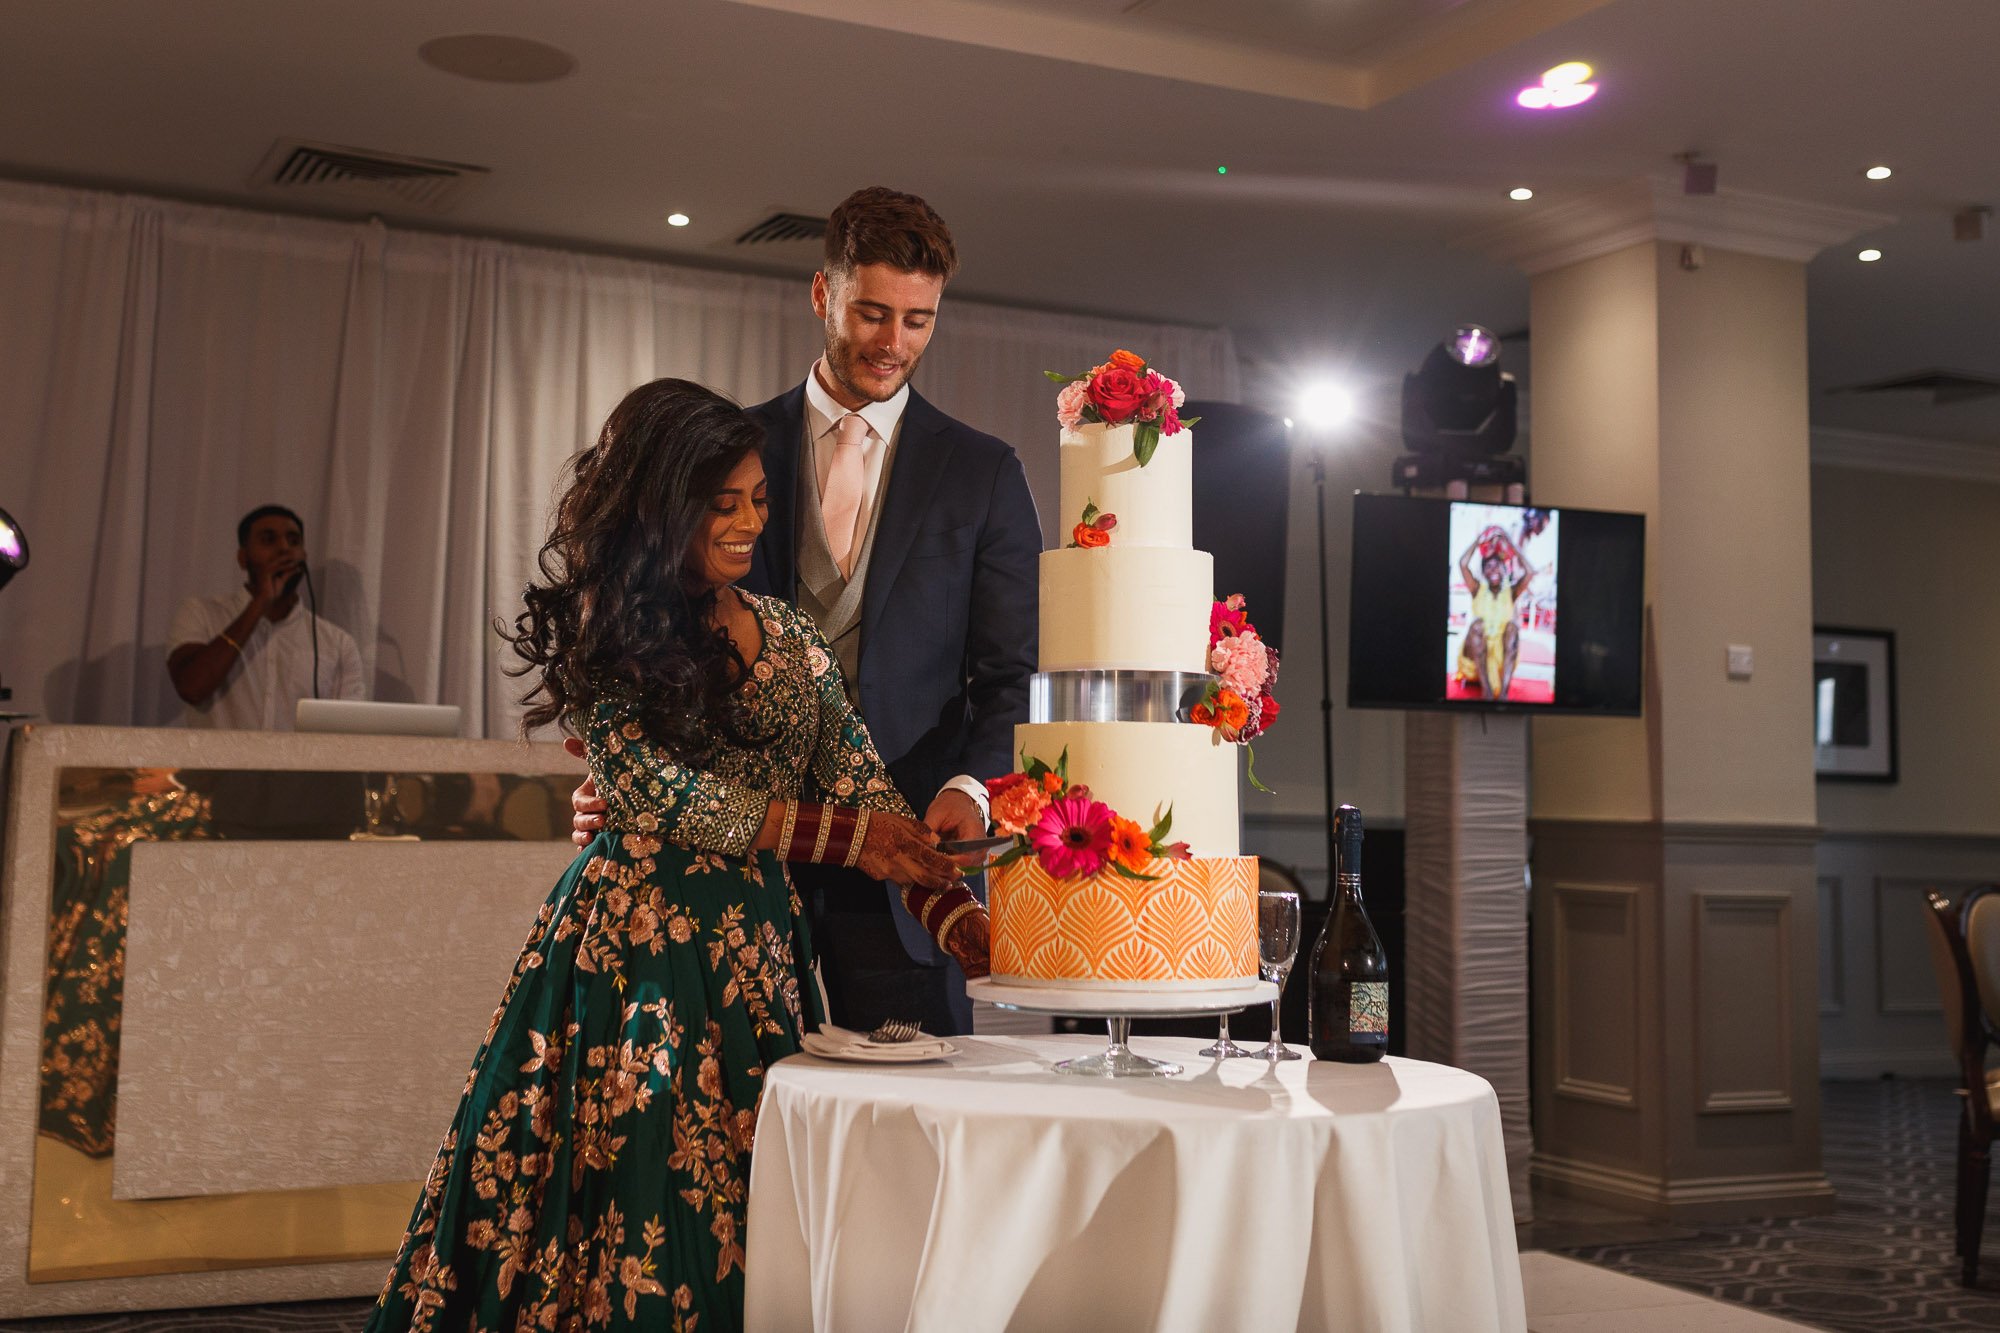 De Vere Wokefield Estate, Asian wedding photographer, reception, cake cutting, Paari Cakes